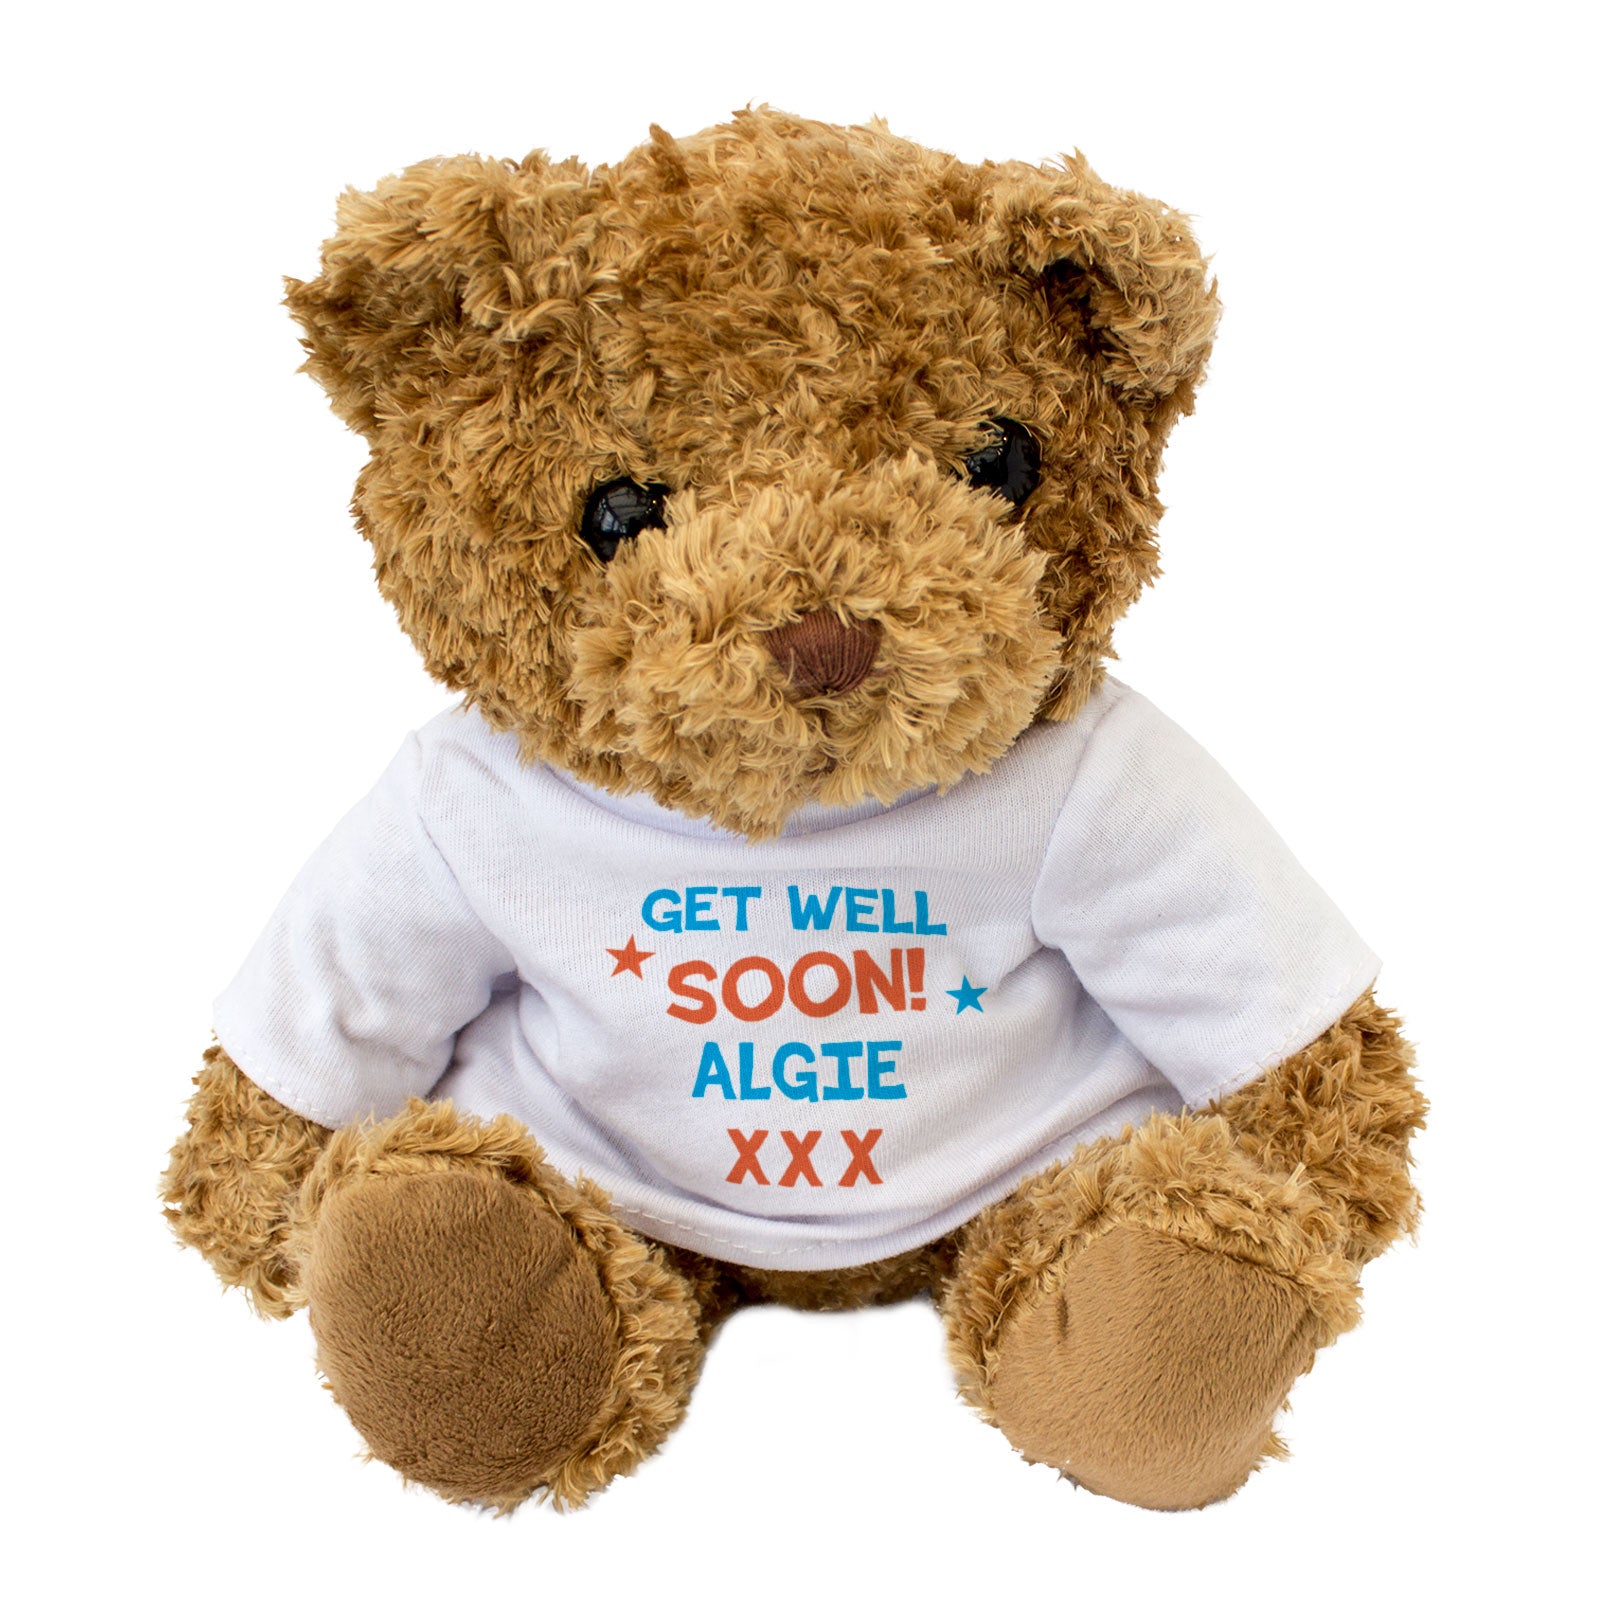 Get Well Soon Algie - Teddy Bear